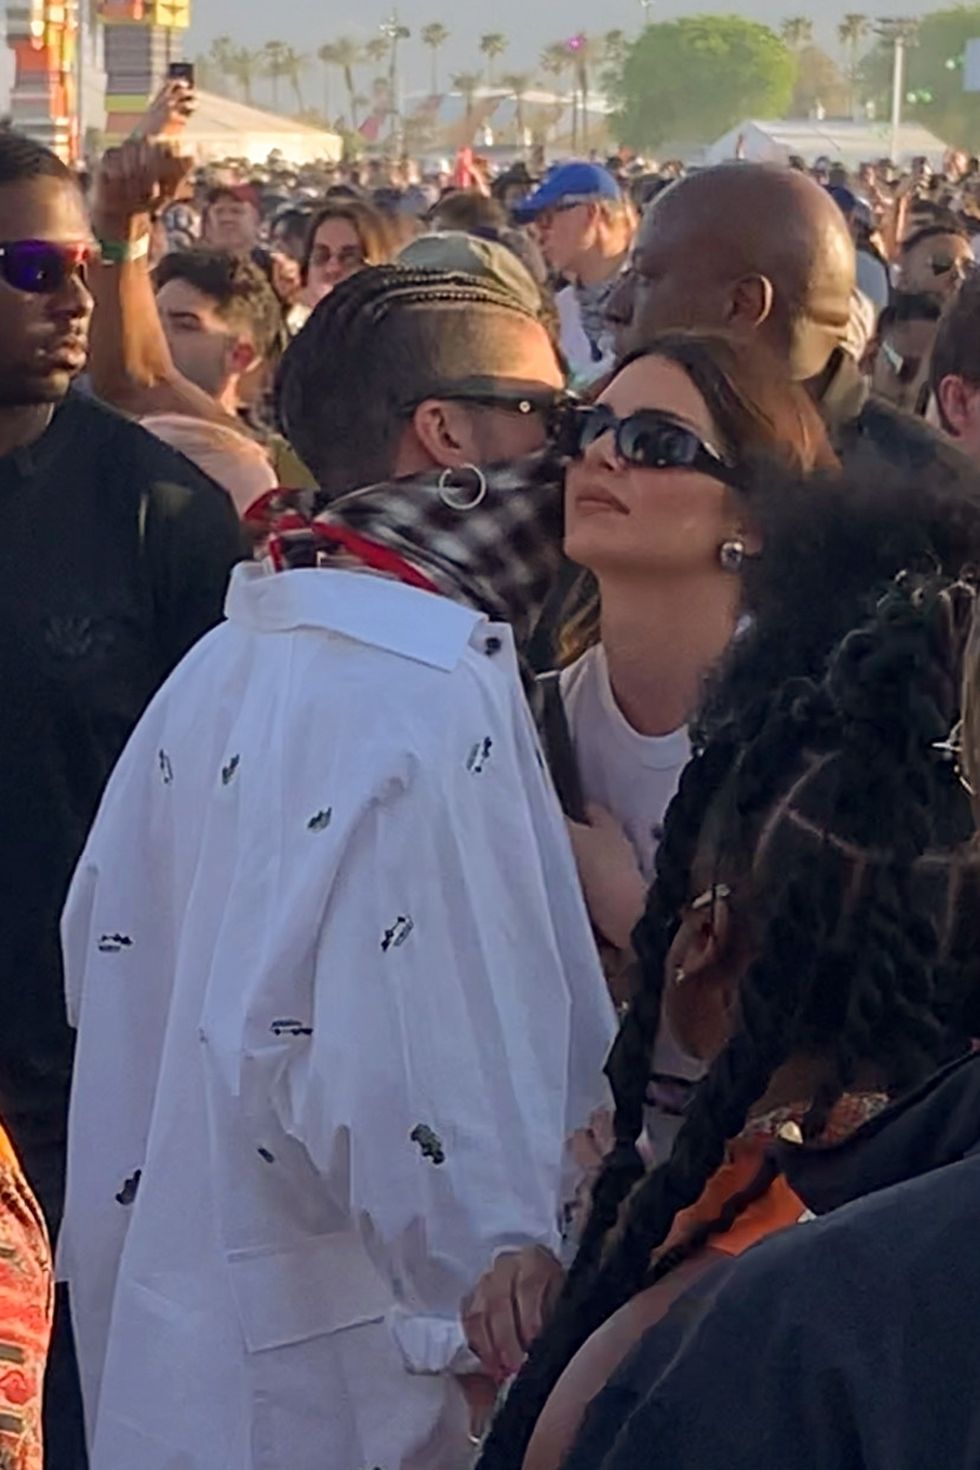 Bad Bunny photos, including Kendall Jenner dates, Coachella